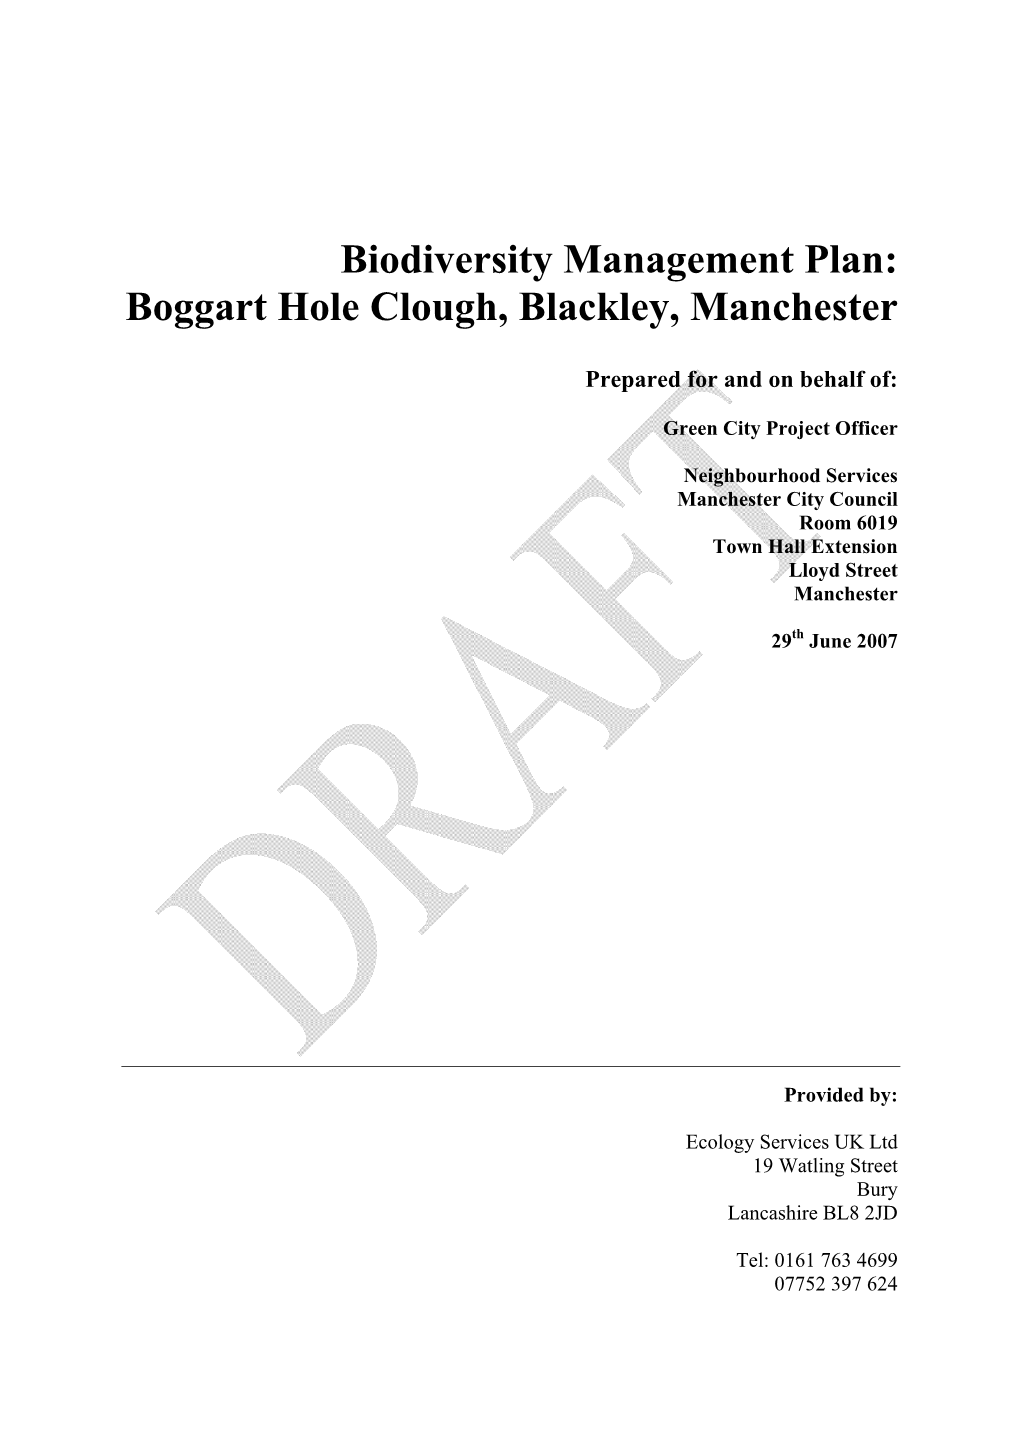 Biodiversity Management Plan: Boggart Hole Clough, Blackley, Manchester